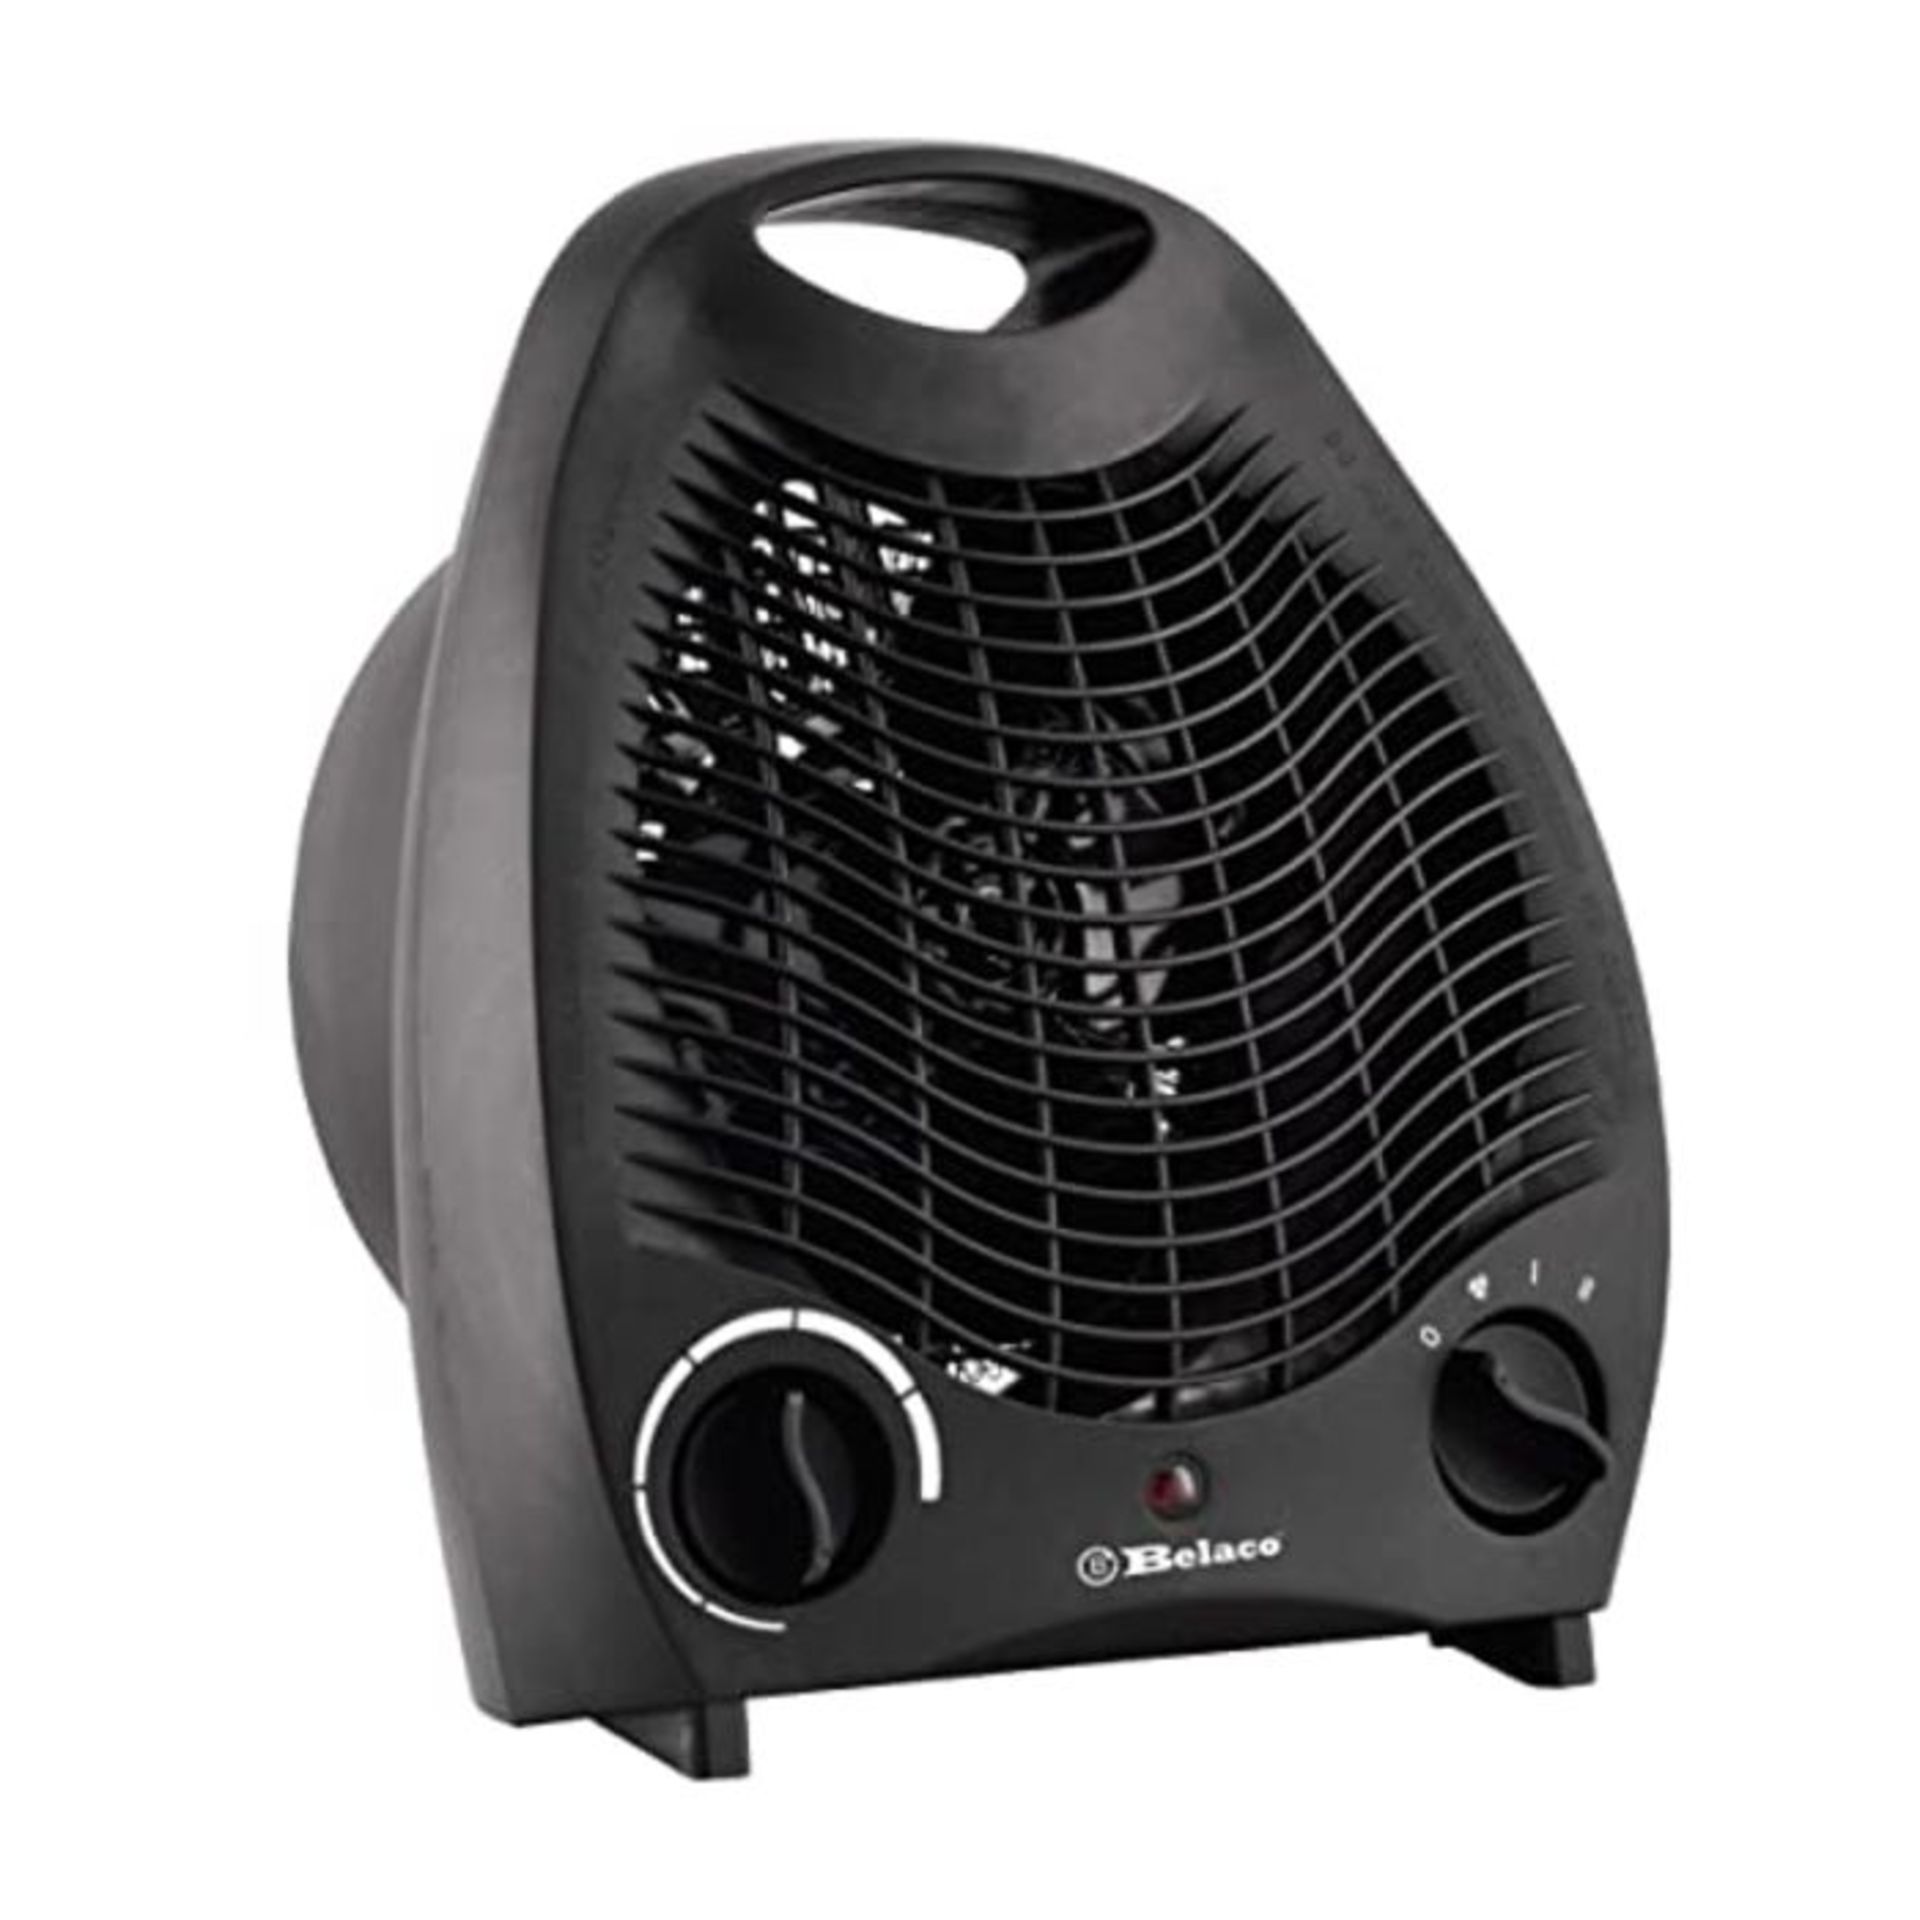 Belaco Fan Heater 2 Heat Settings 1000/2000W Electric Heaters Overheat Protection BFH2 - Image 4 of 6